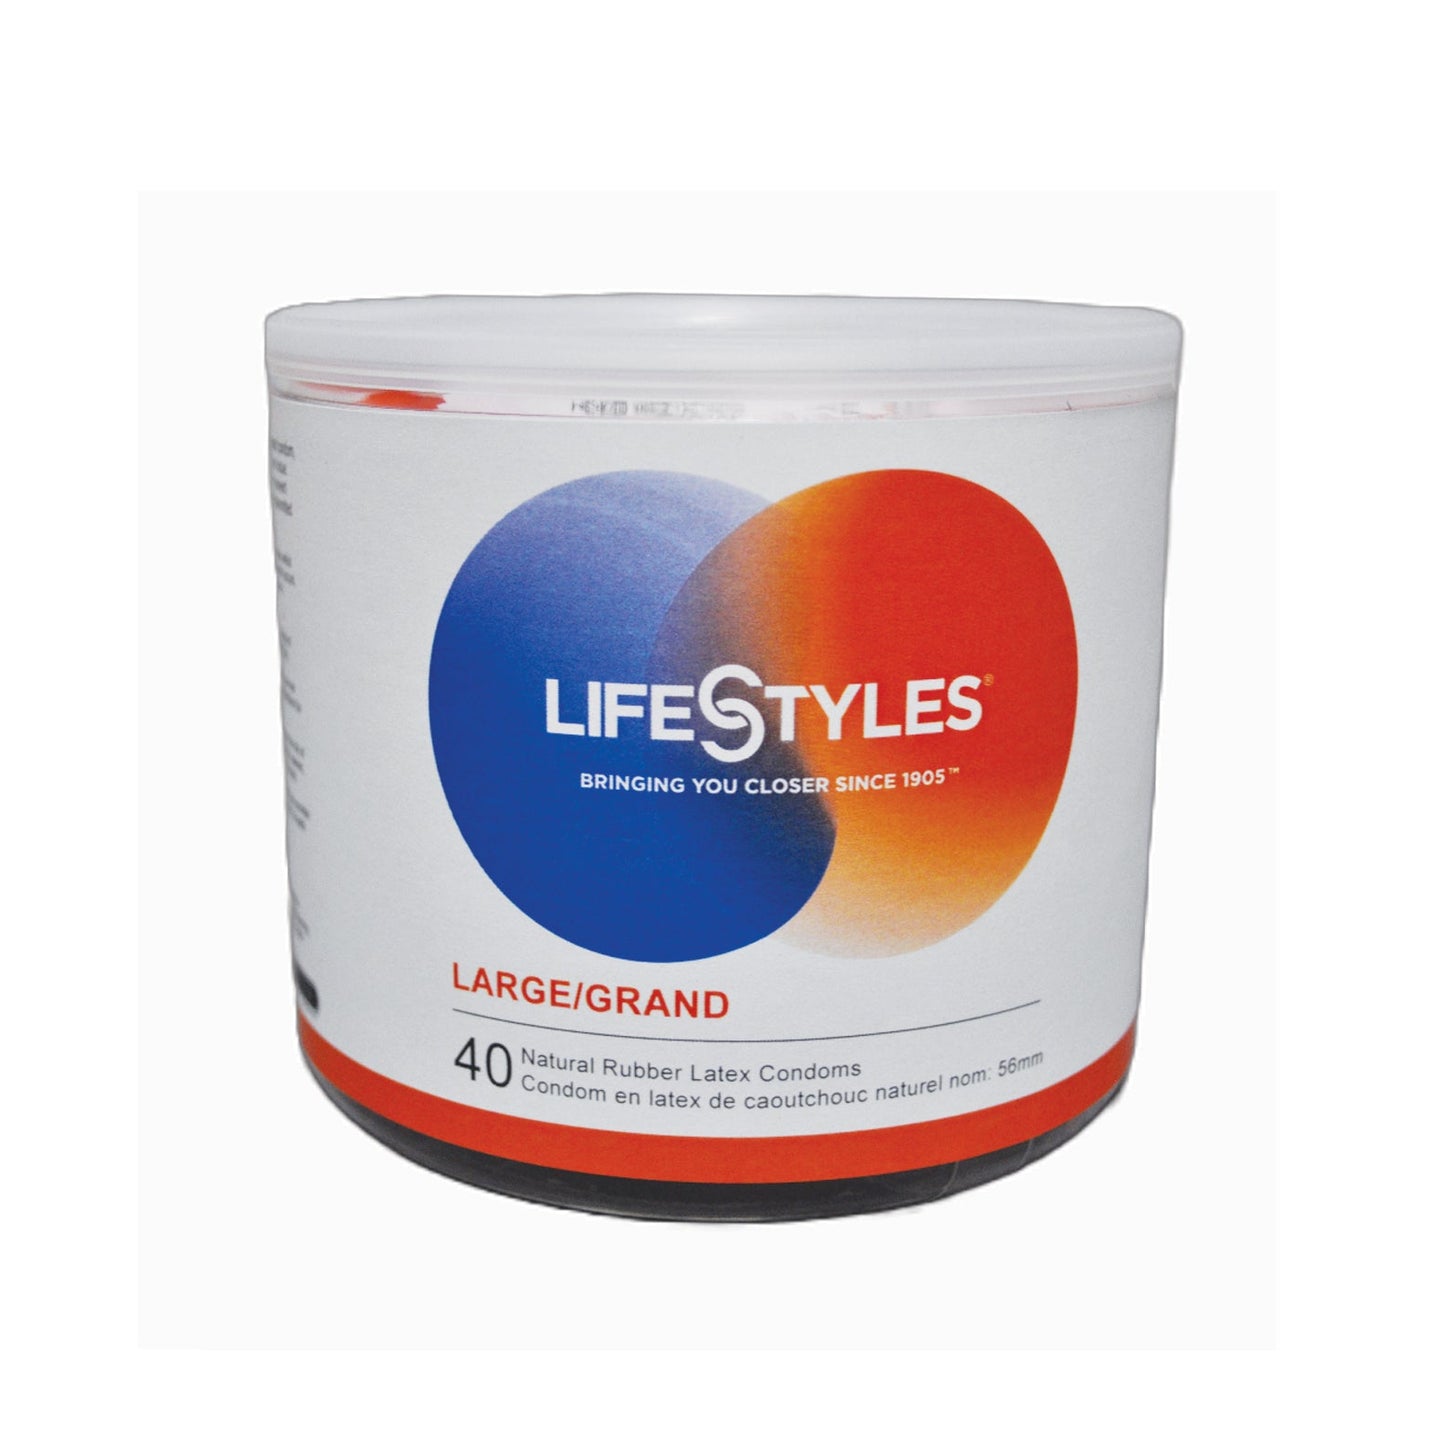 Lifestyles Large Condom - Bowl of 40